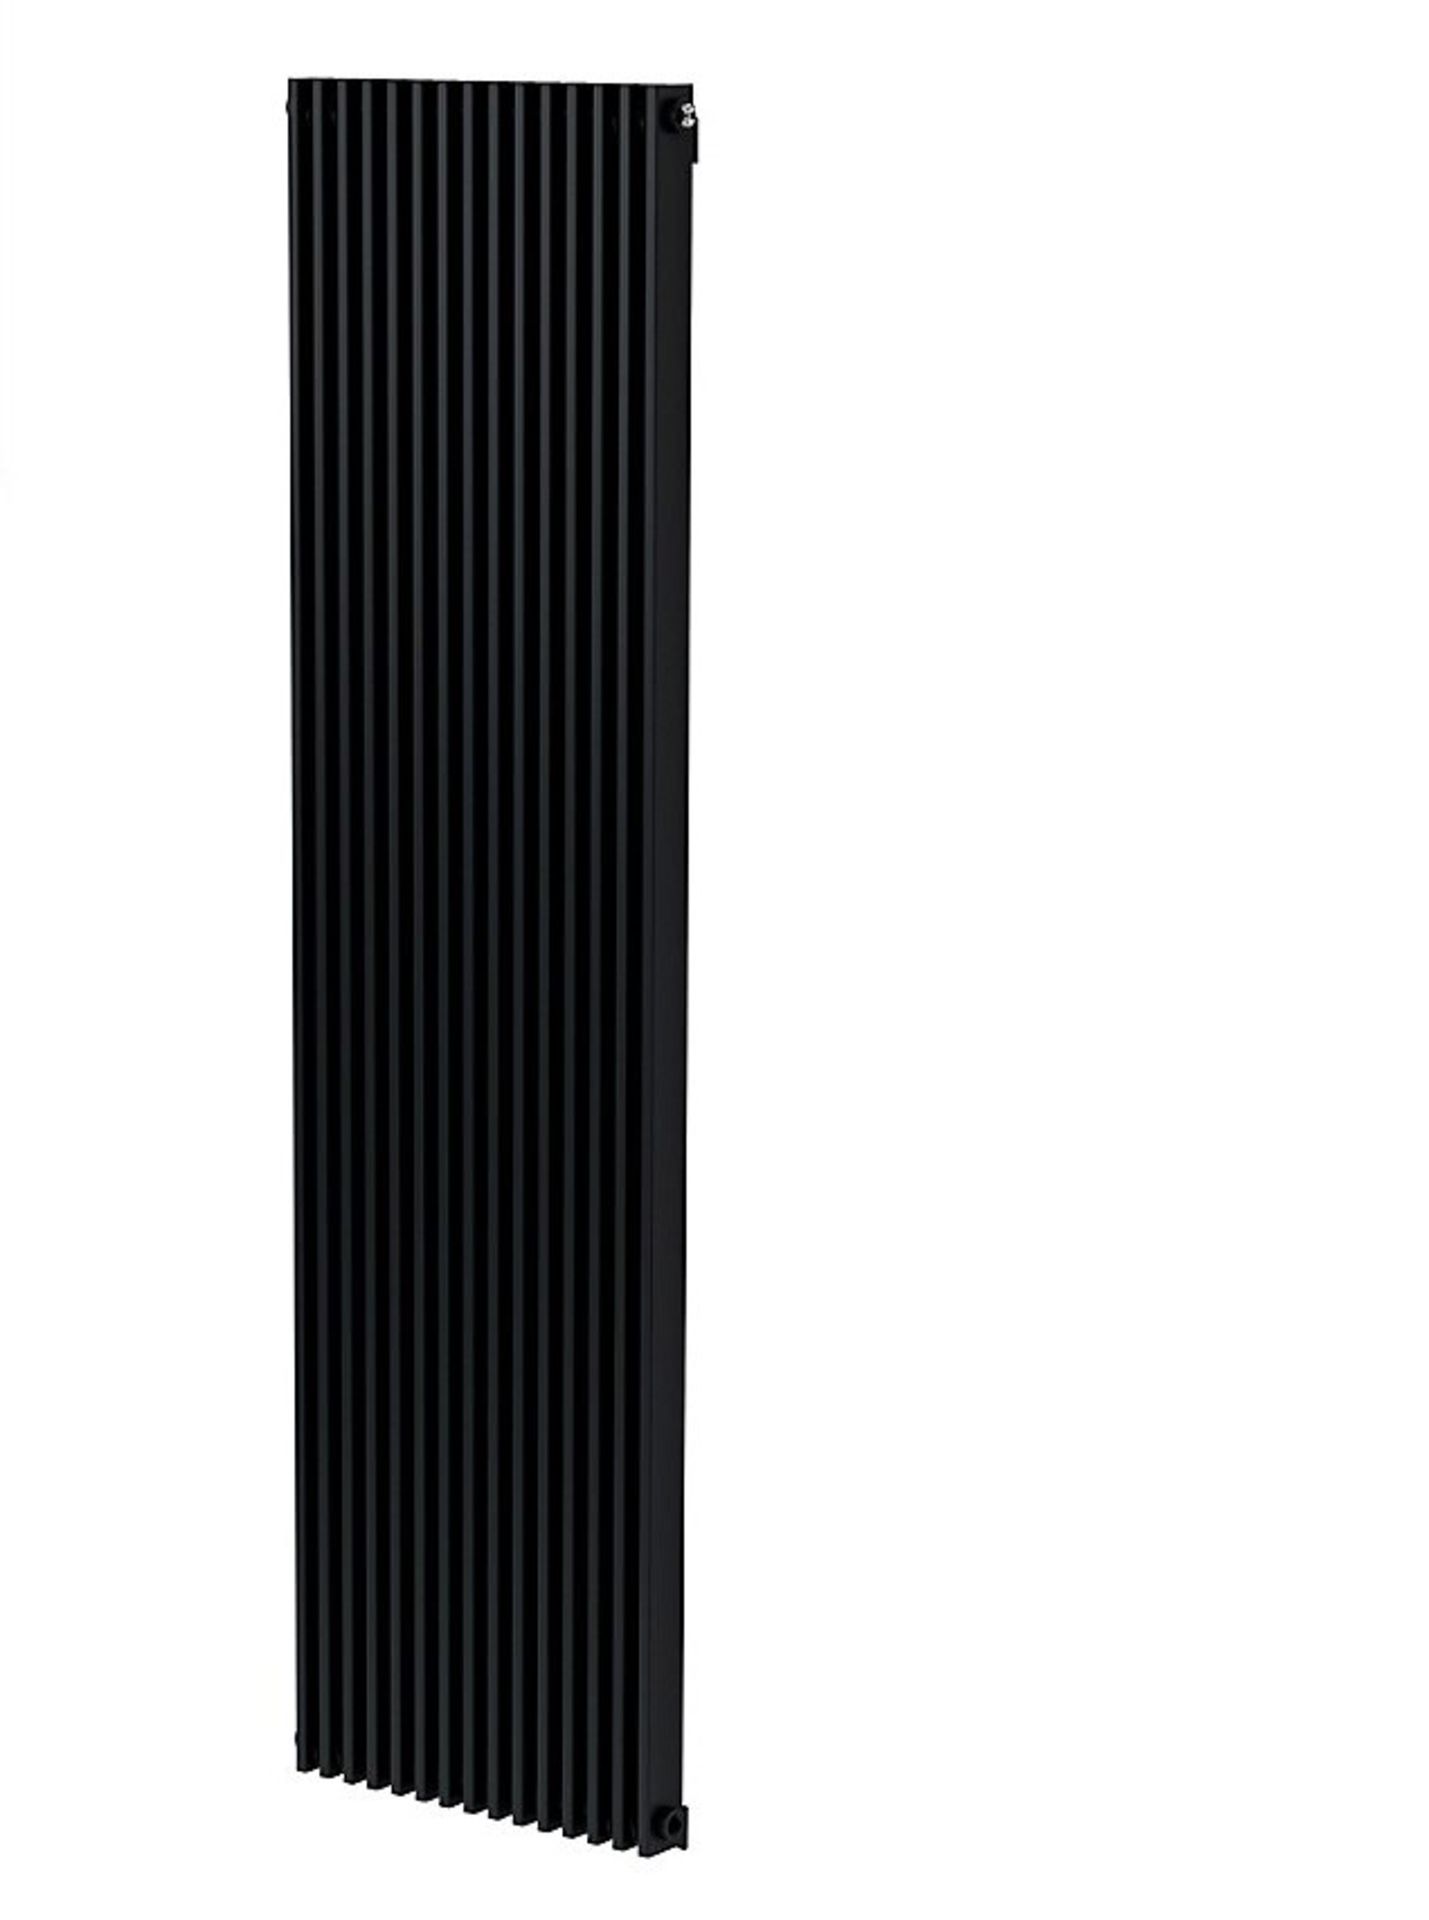 (RR84) 1800x500mm Kensal Vertical Designer Radiator Anthracite Painted. RRP £449.99. The Kensa... ( - Image 3 of 3